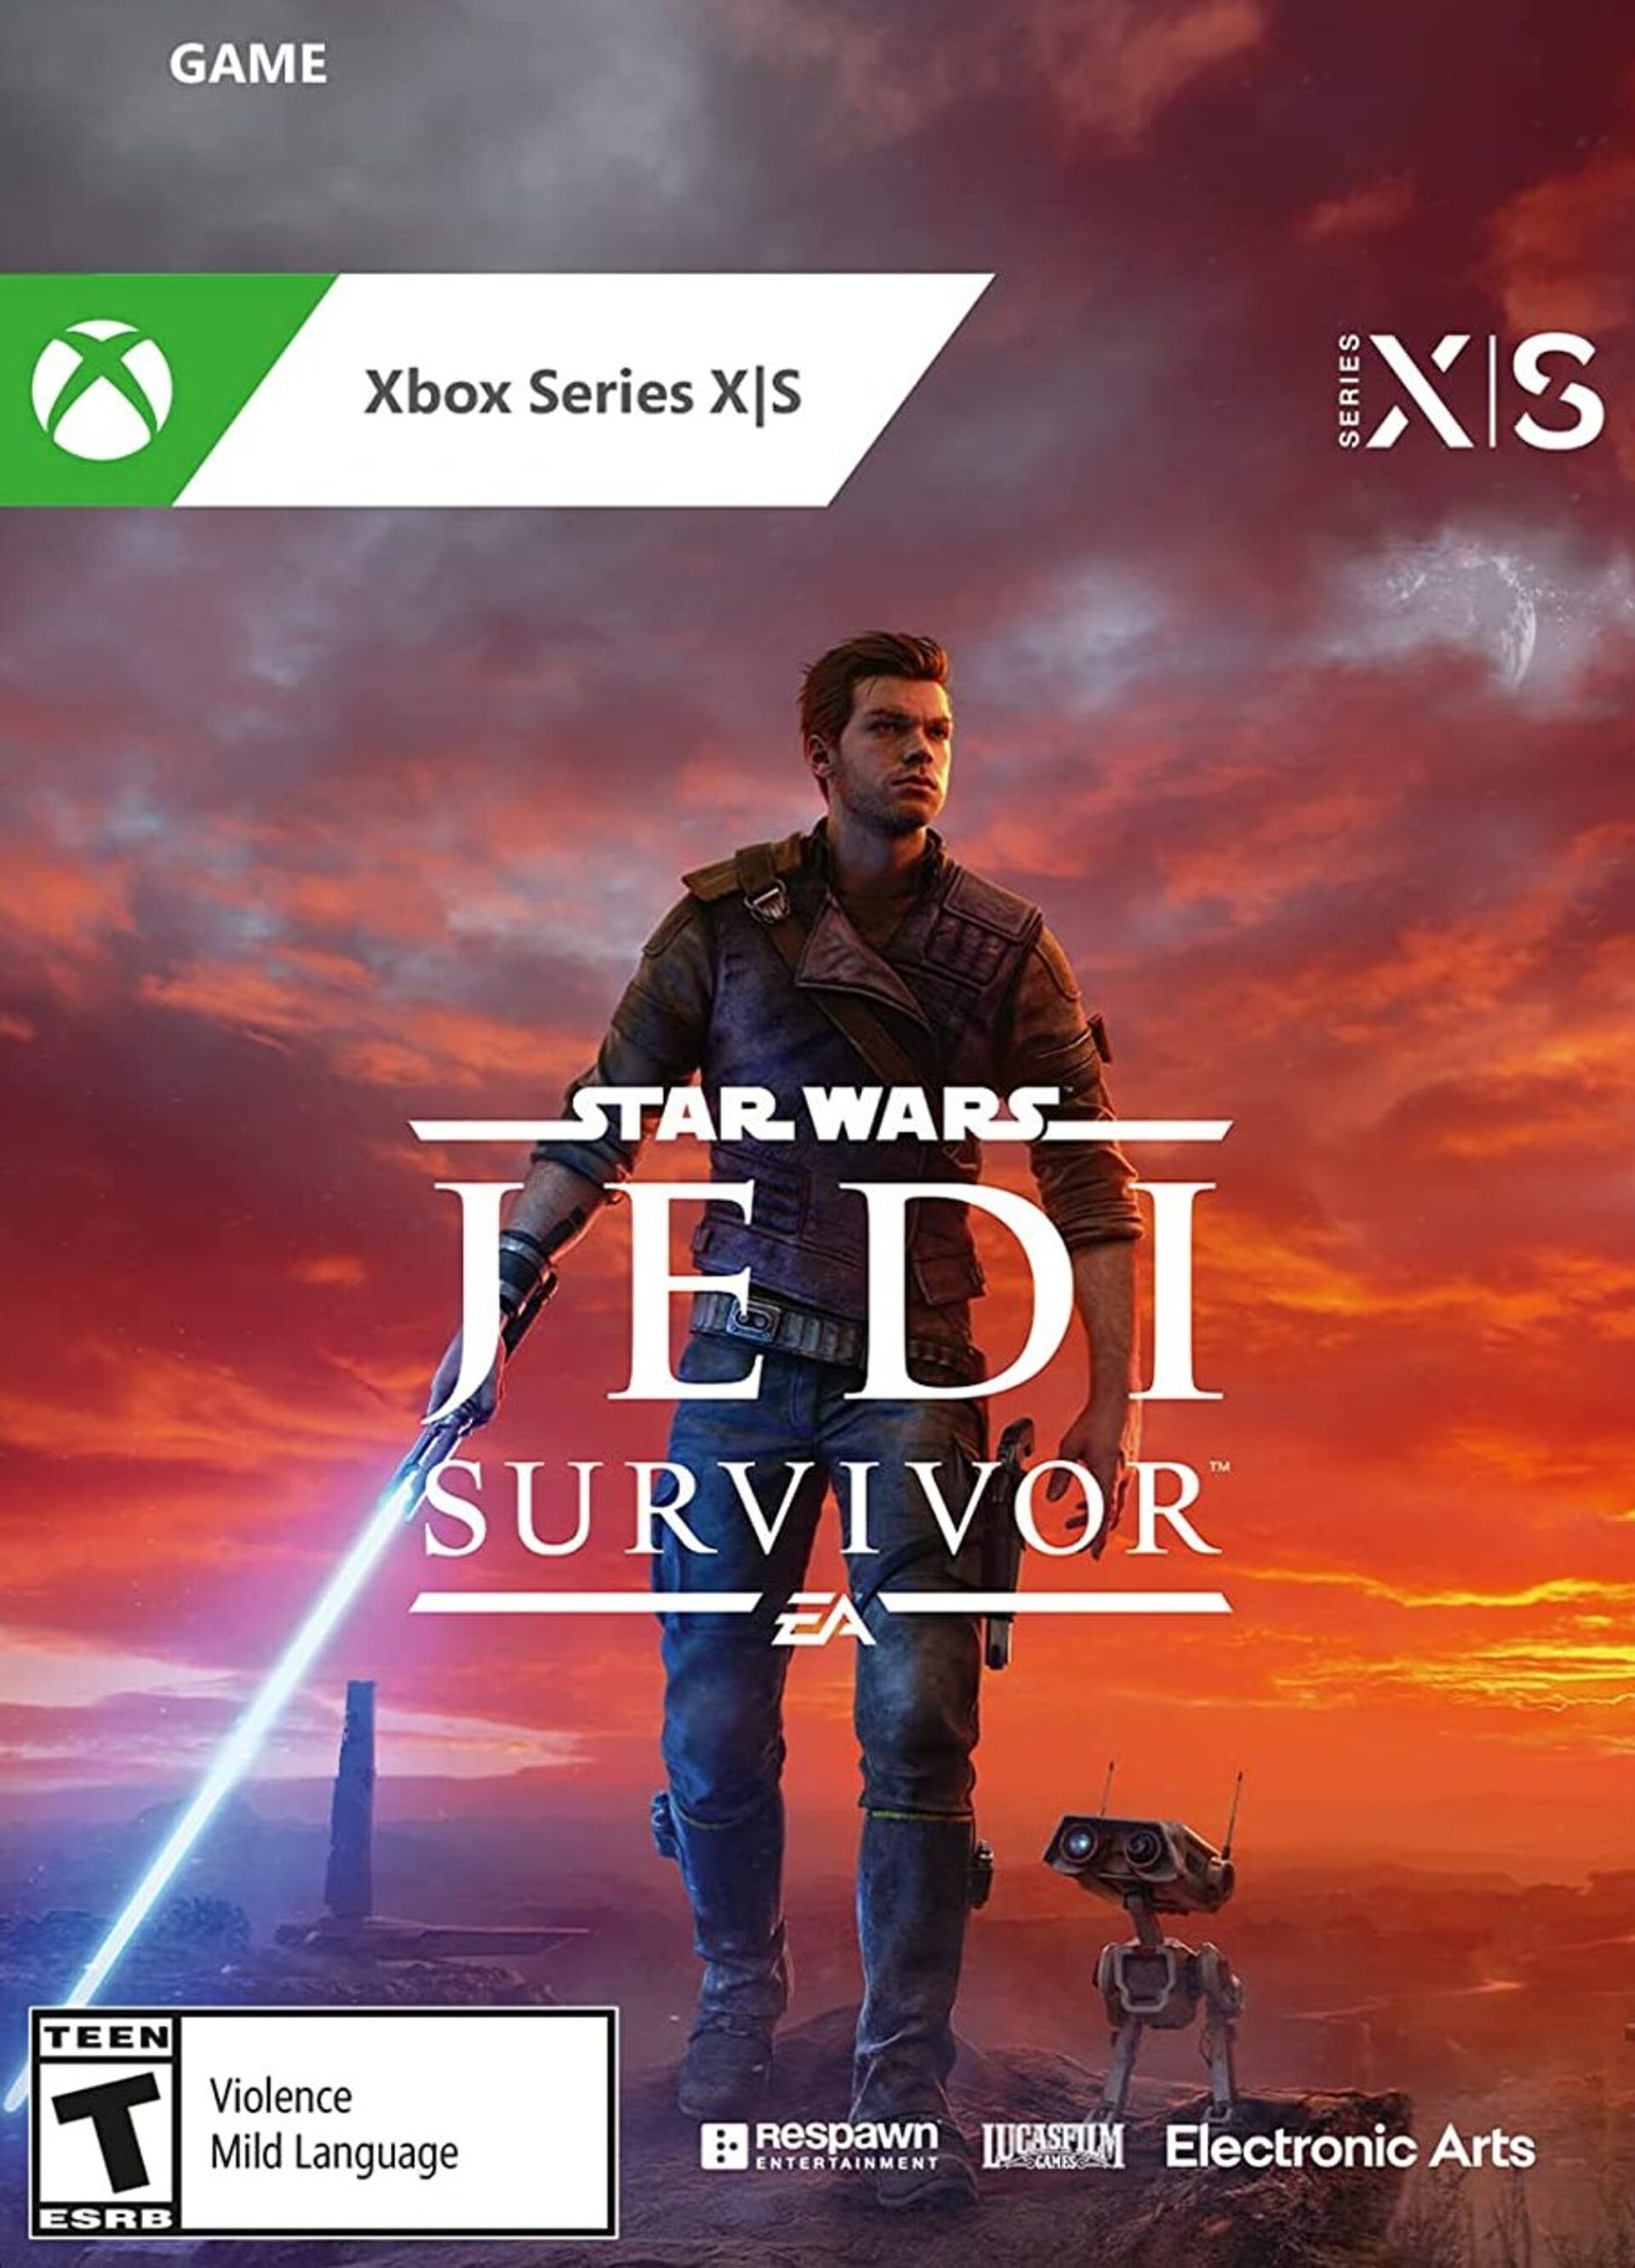 STAR WARS Jedi: Survivor™  Télécharger et acheter aujourd'hui